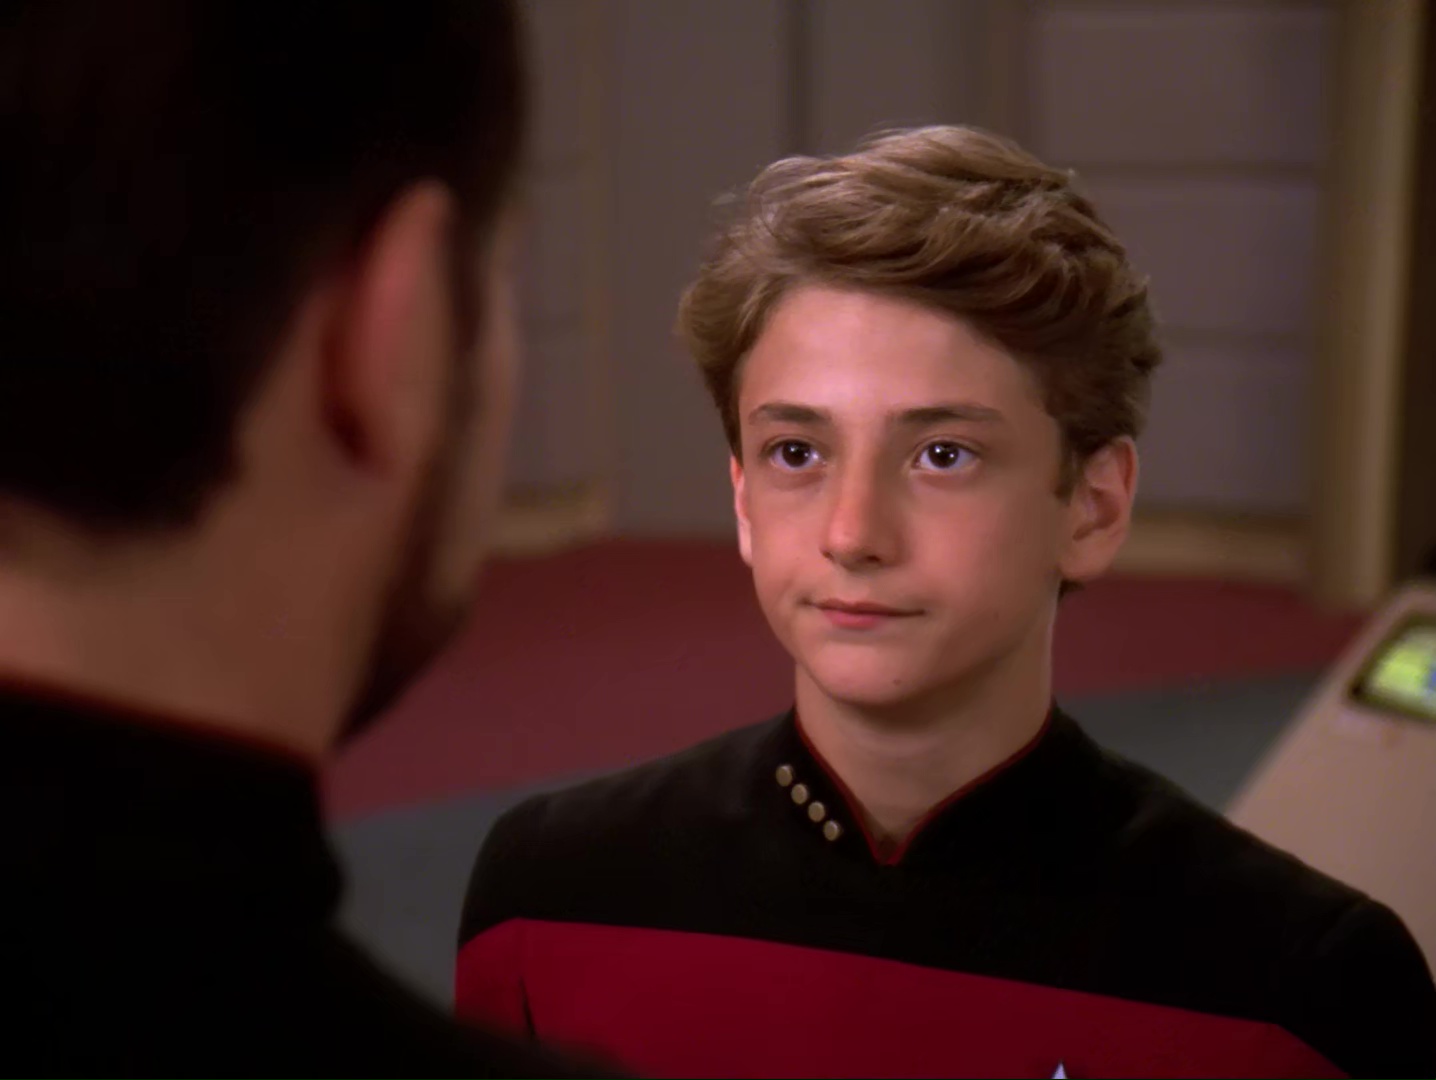 Jean-Luc Picard, age 12